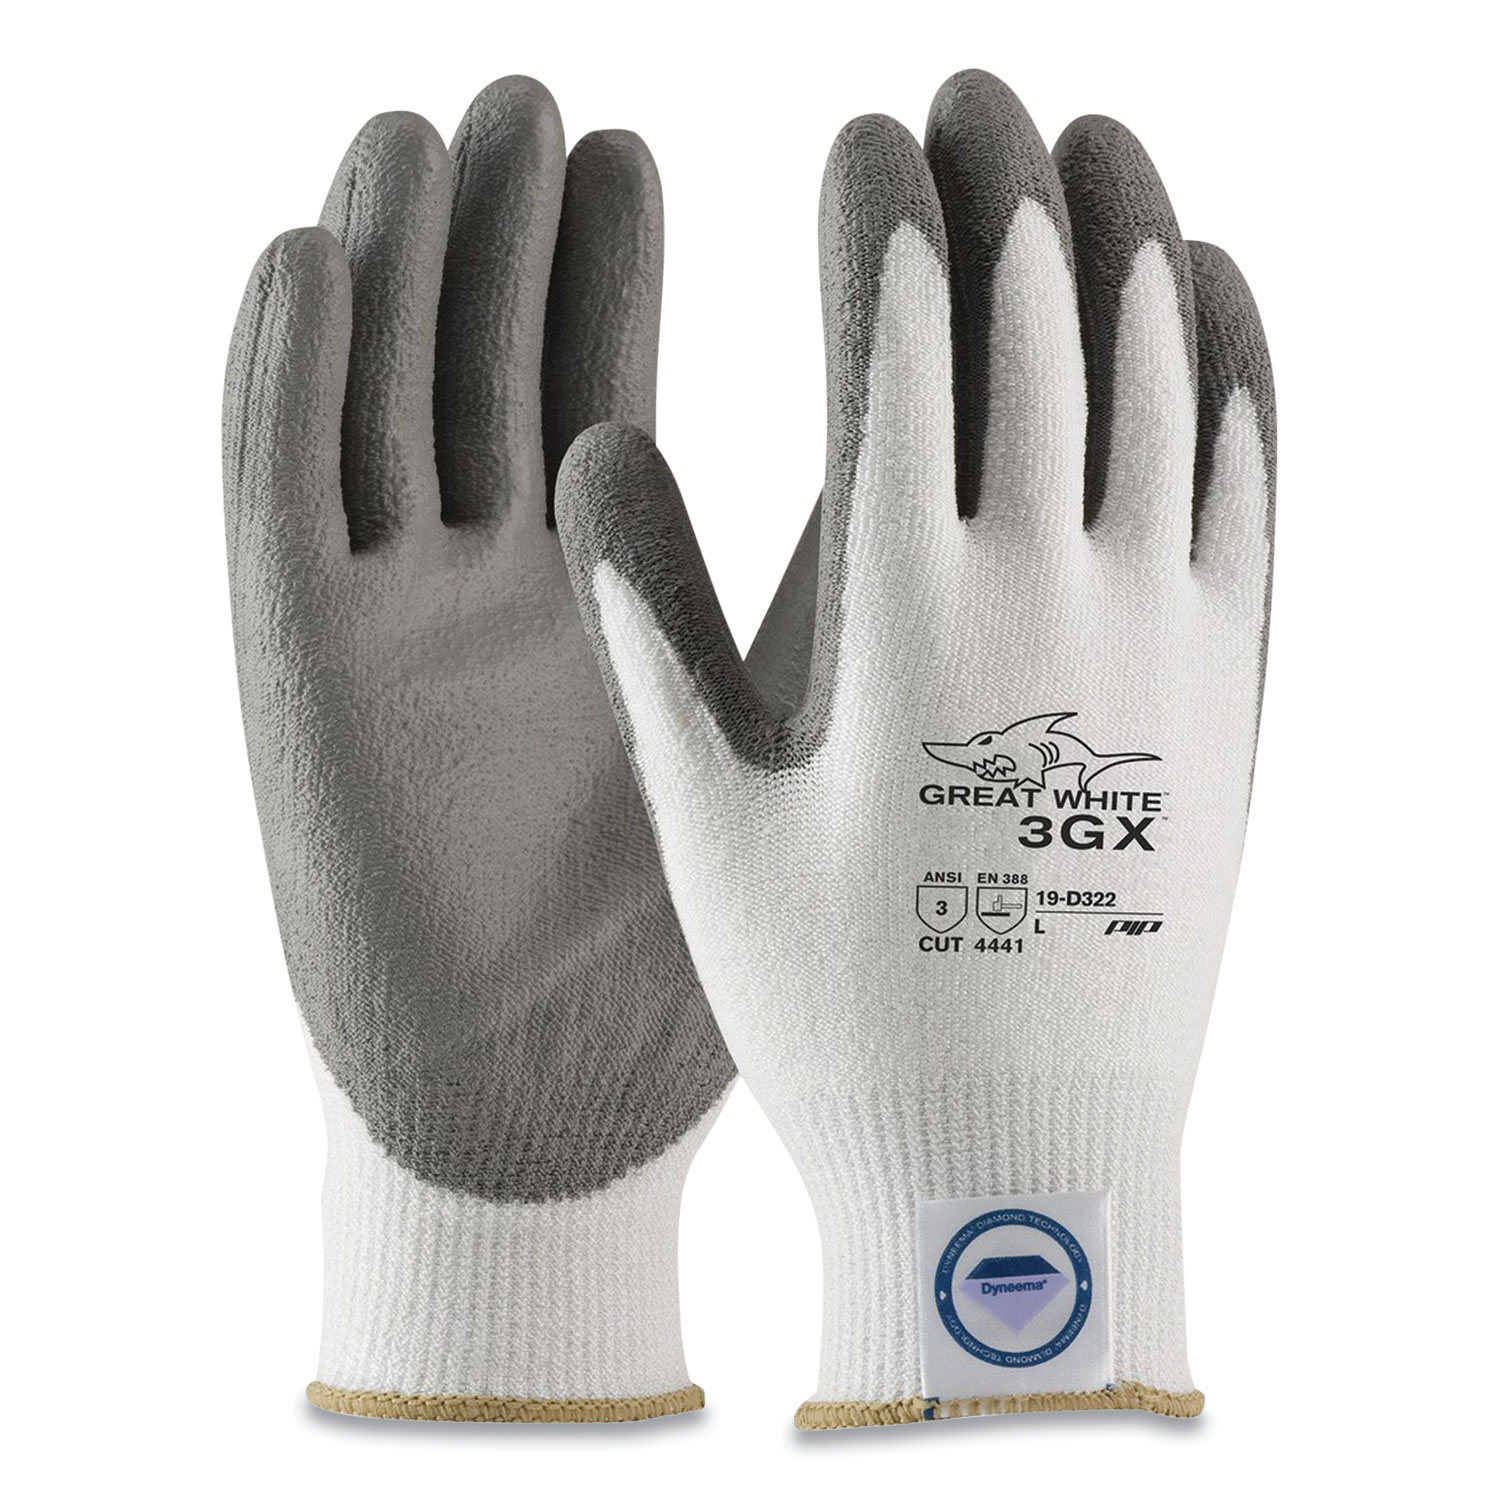 PIP Great White 3GX Seamless Knit Dyneema Diamond Blended Gloves, X-Large, White/Gray